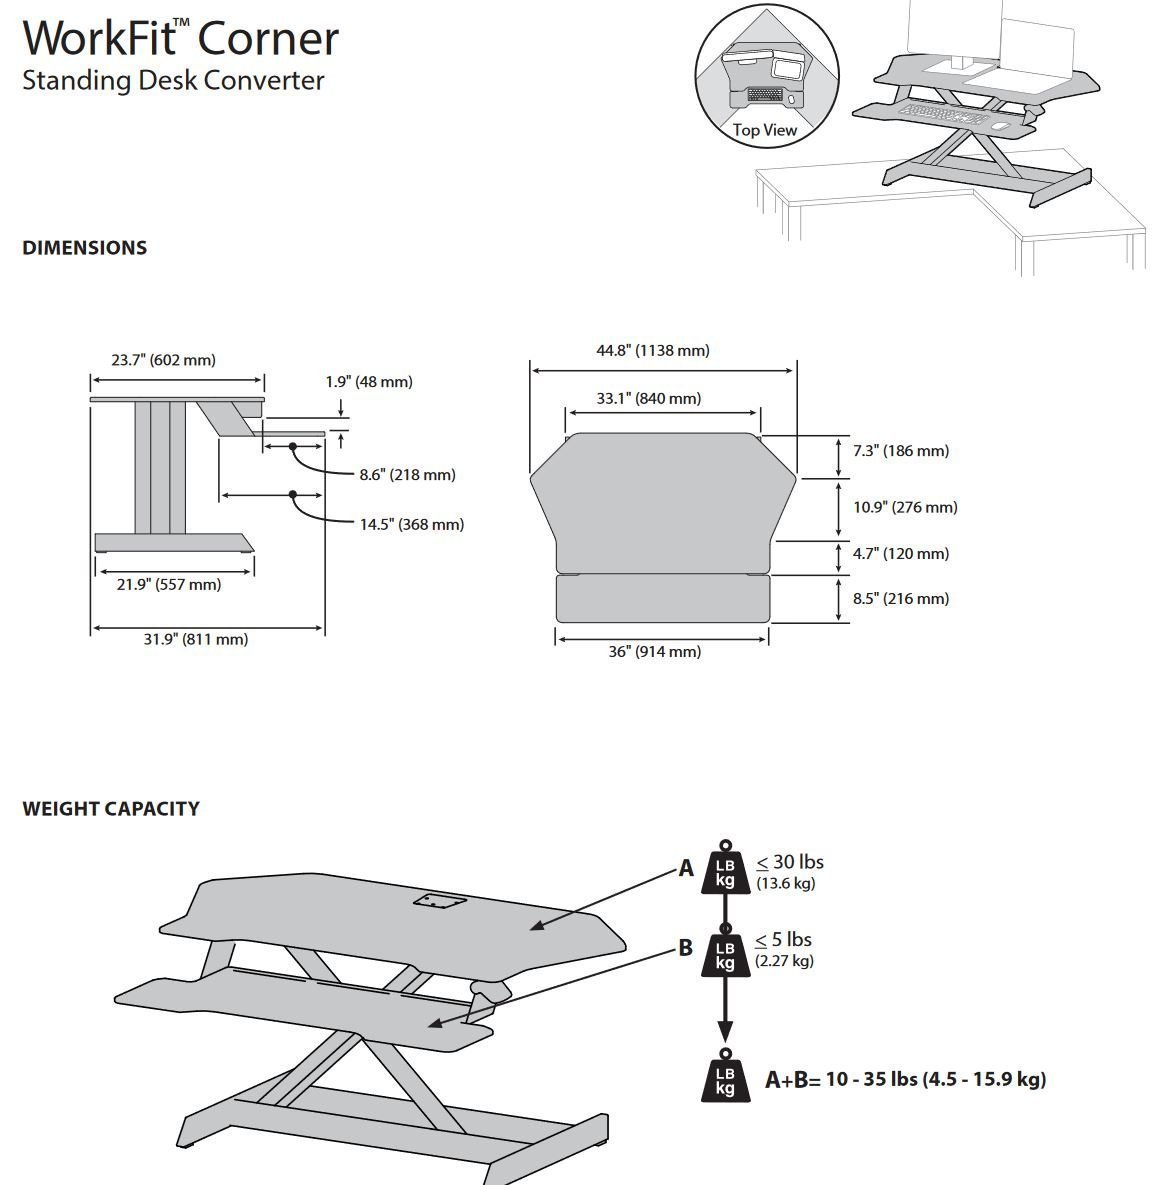 Workfit Corner Dimensions